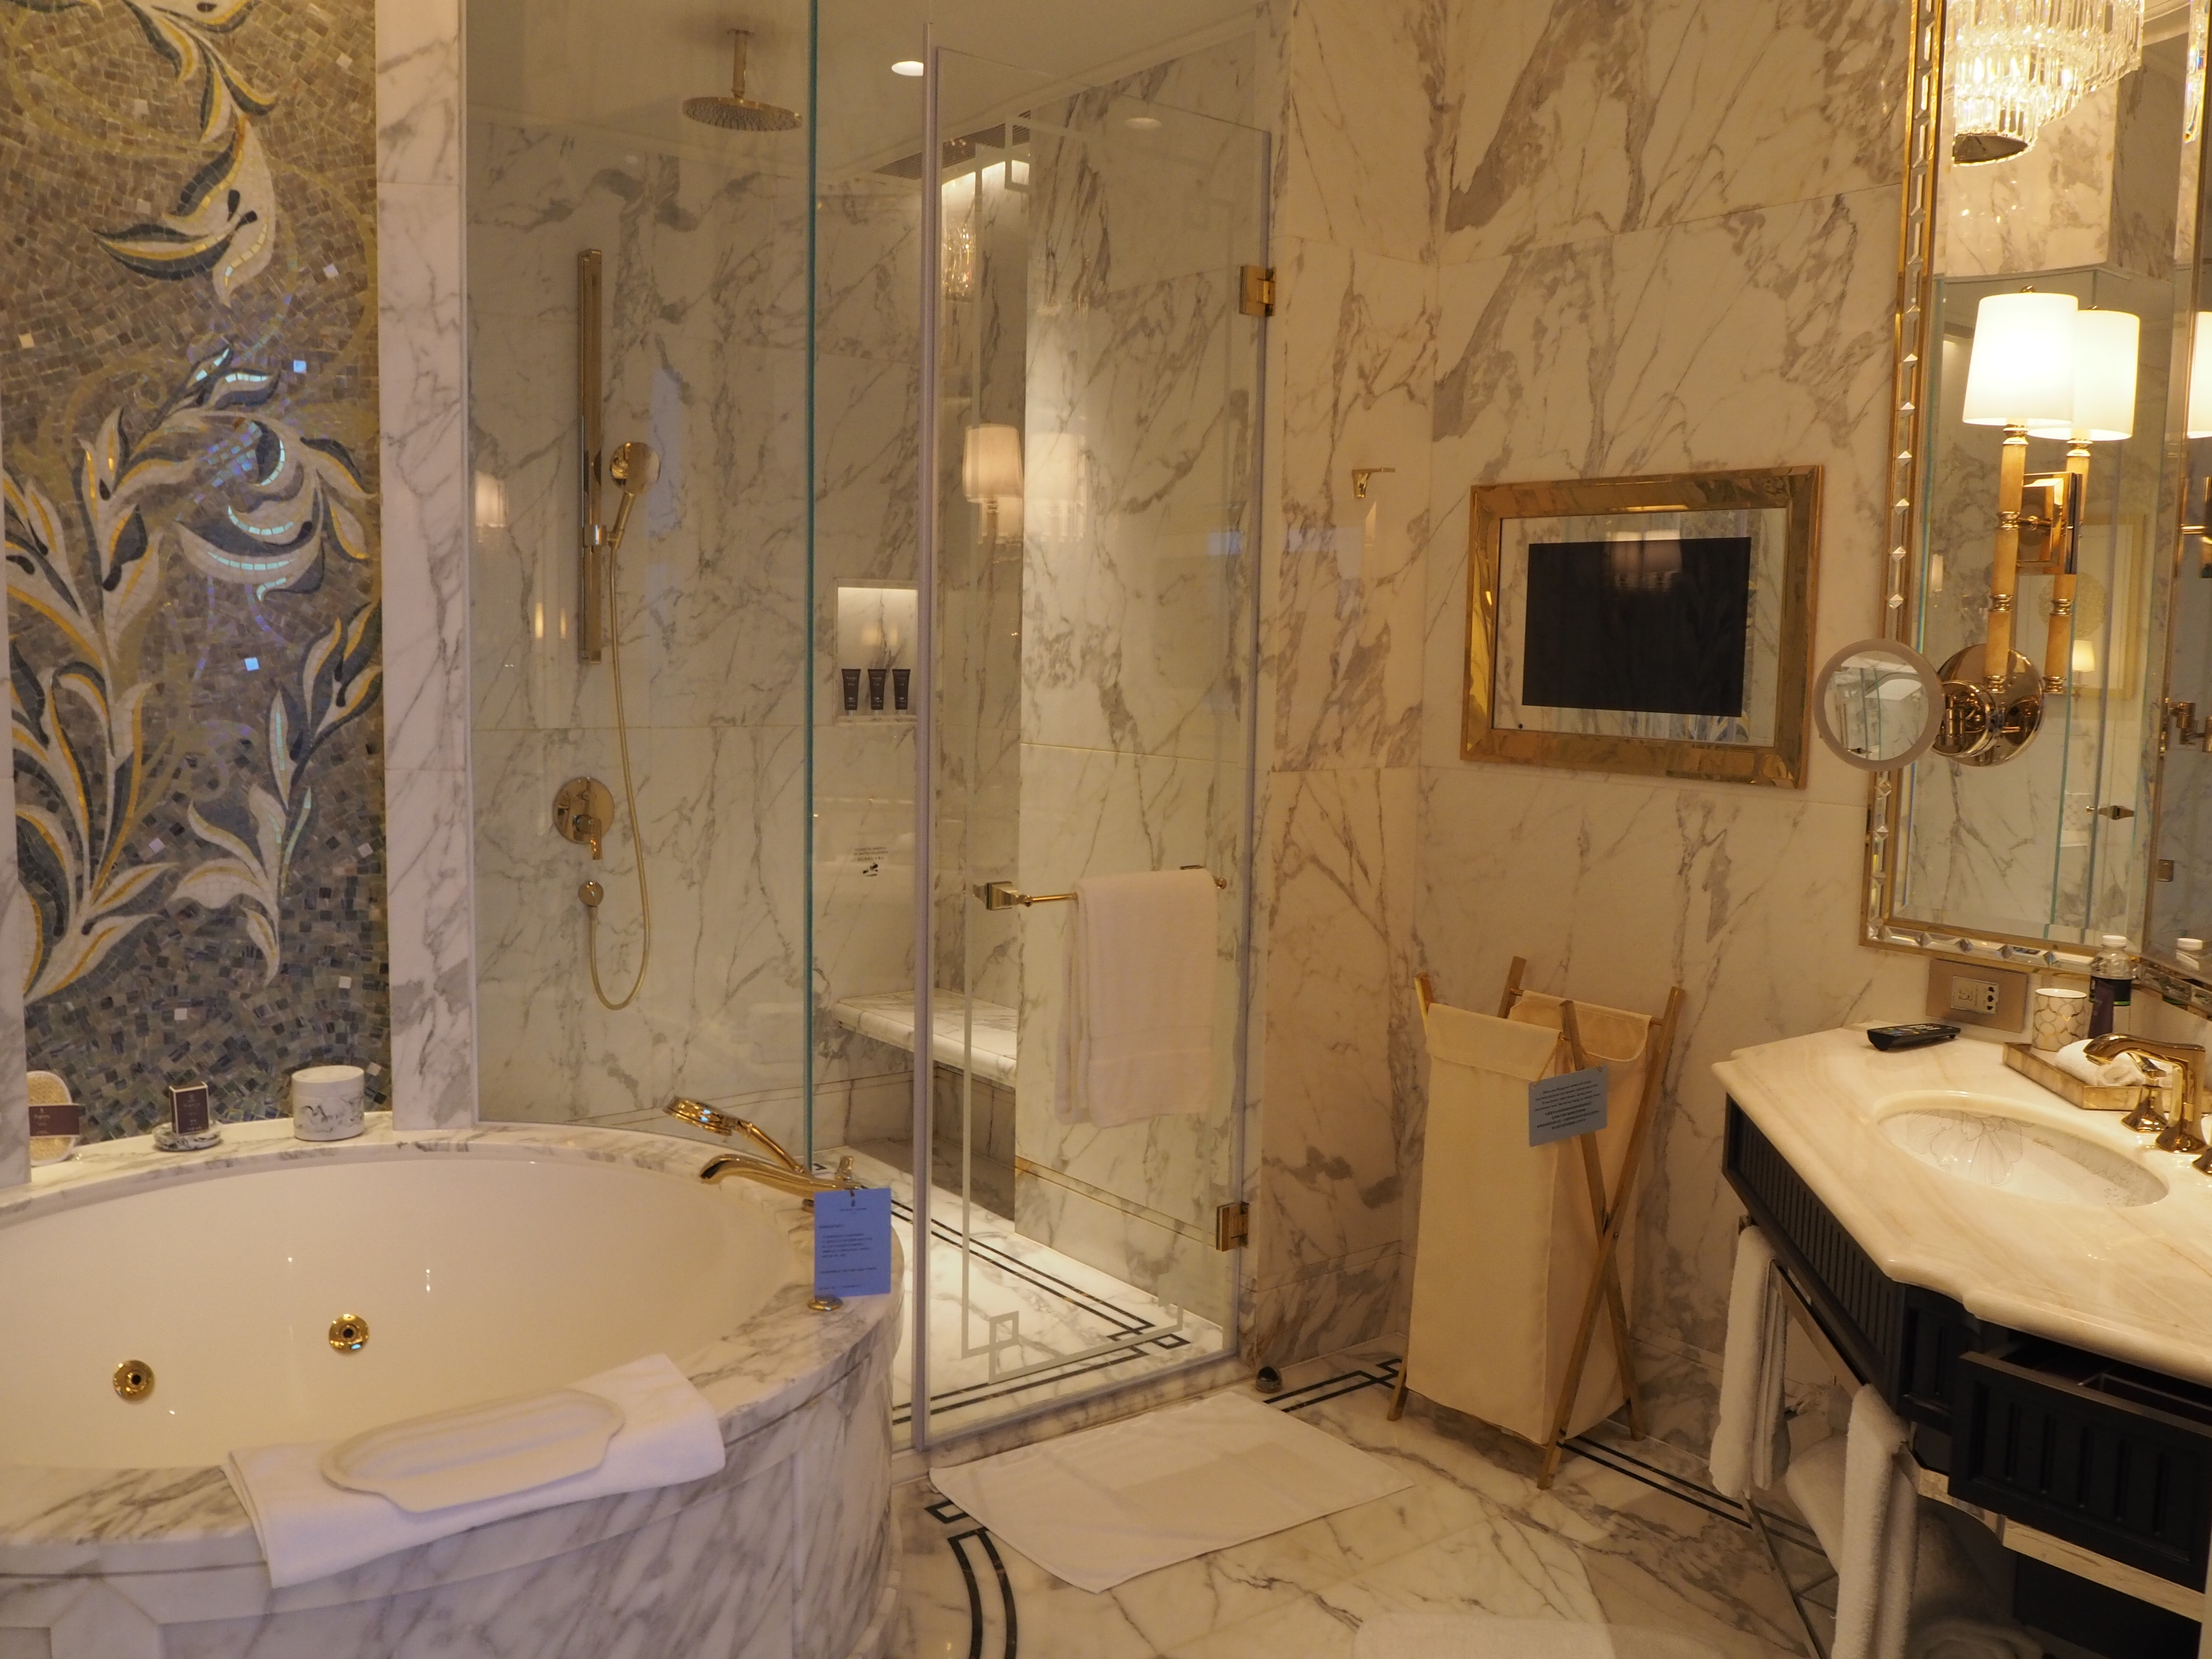 xOA @ Ritz-Carlton Macau pP׷